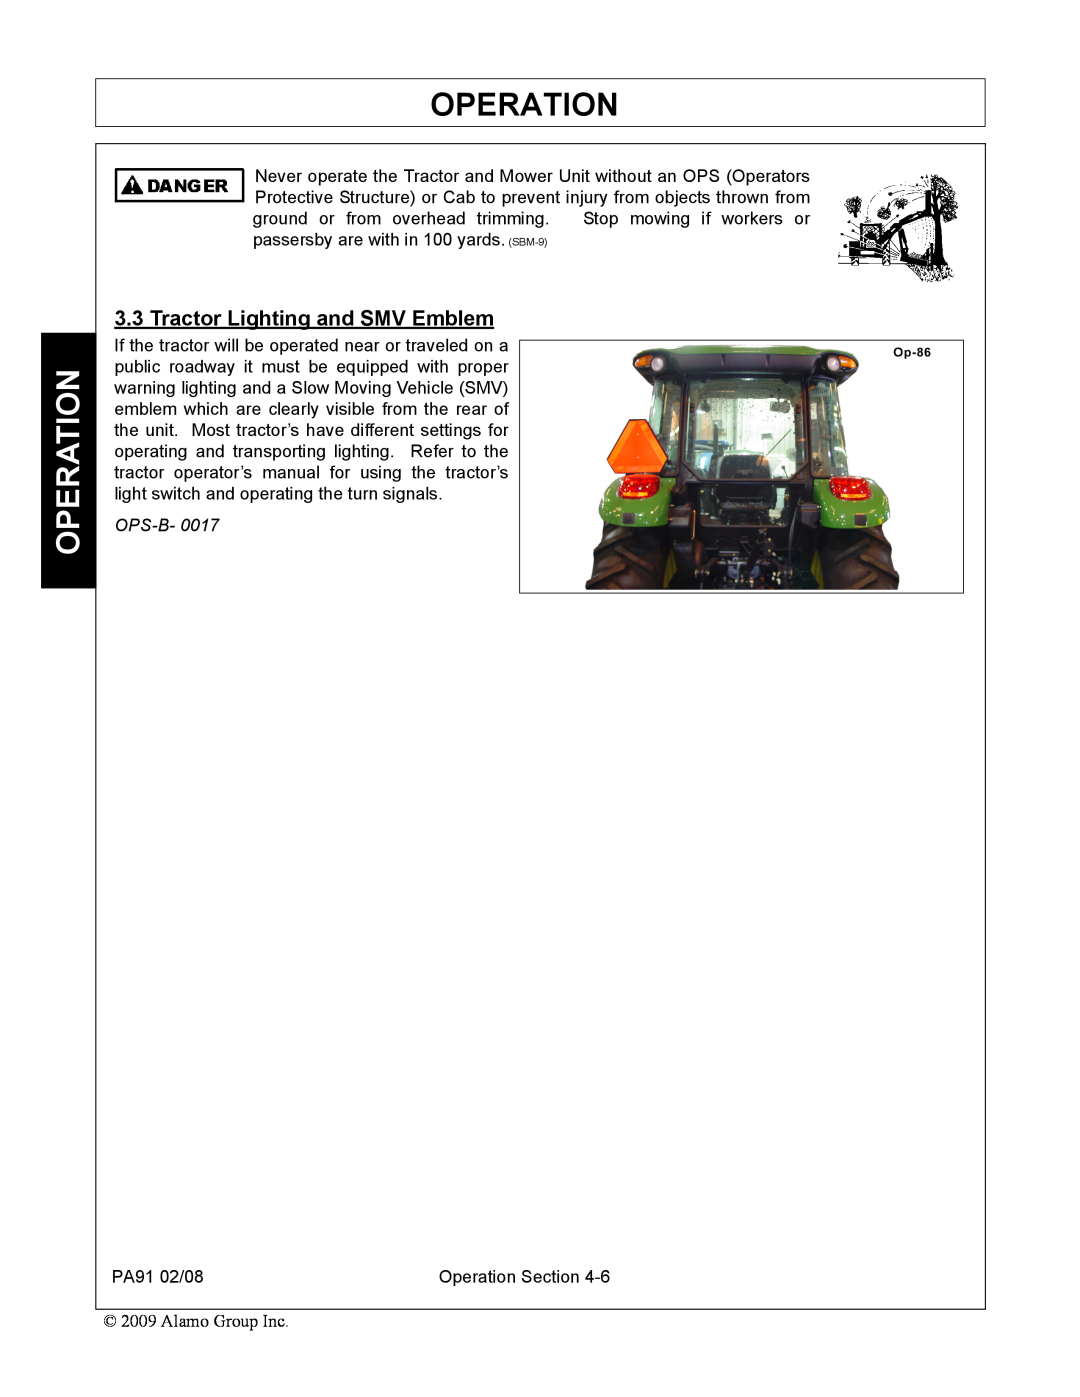 Alamo 7191852C manual Tractor Lighting and SMV Emblem, Operation, OPS-B-0017 